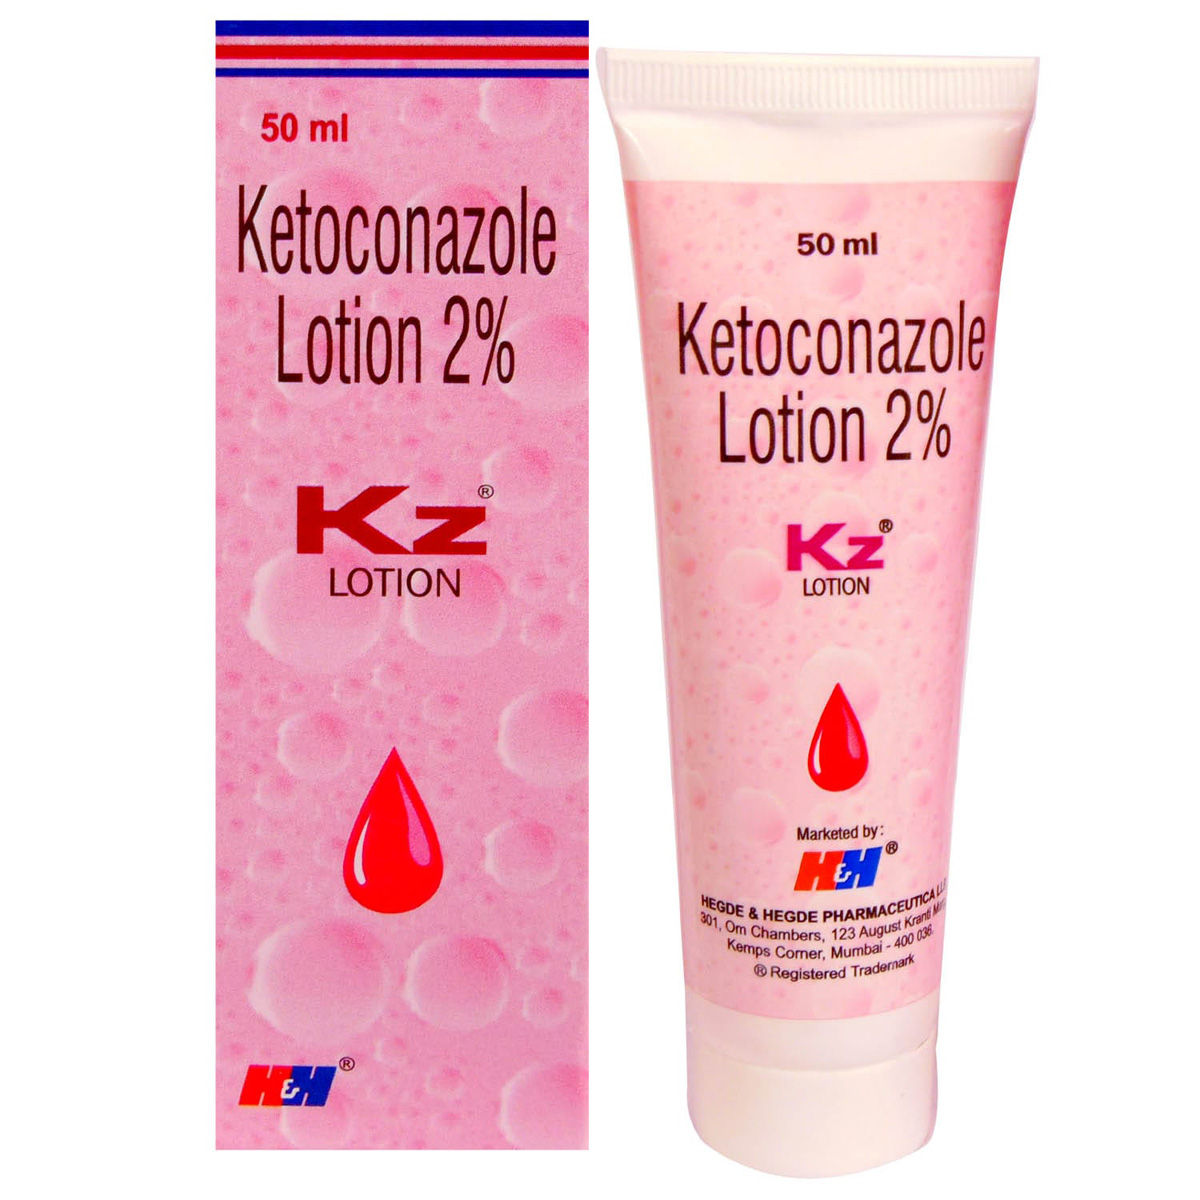 Top More Than 72 Ketoconazole Hair Lotion Super Hot In Eteachers